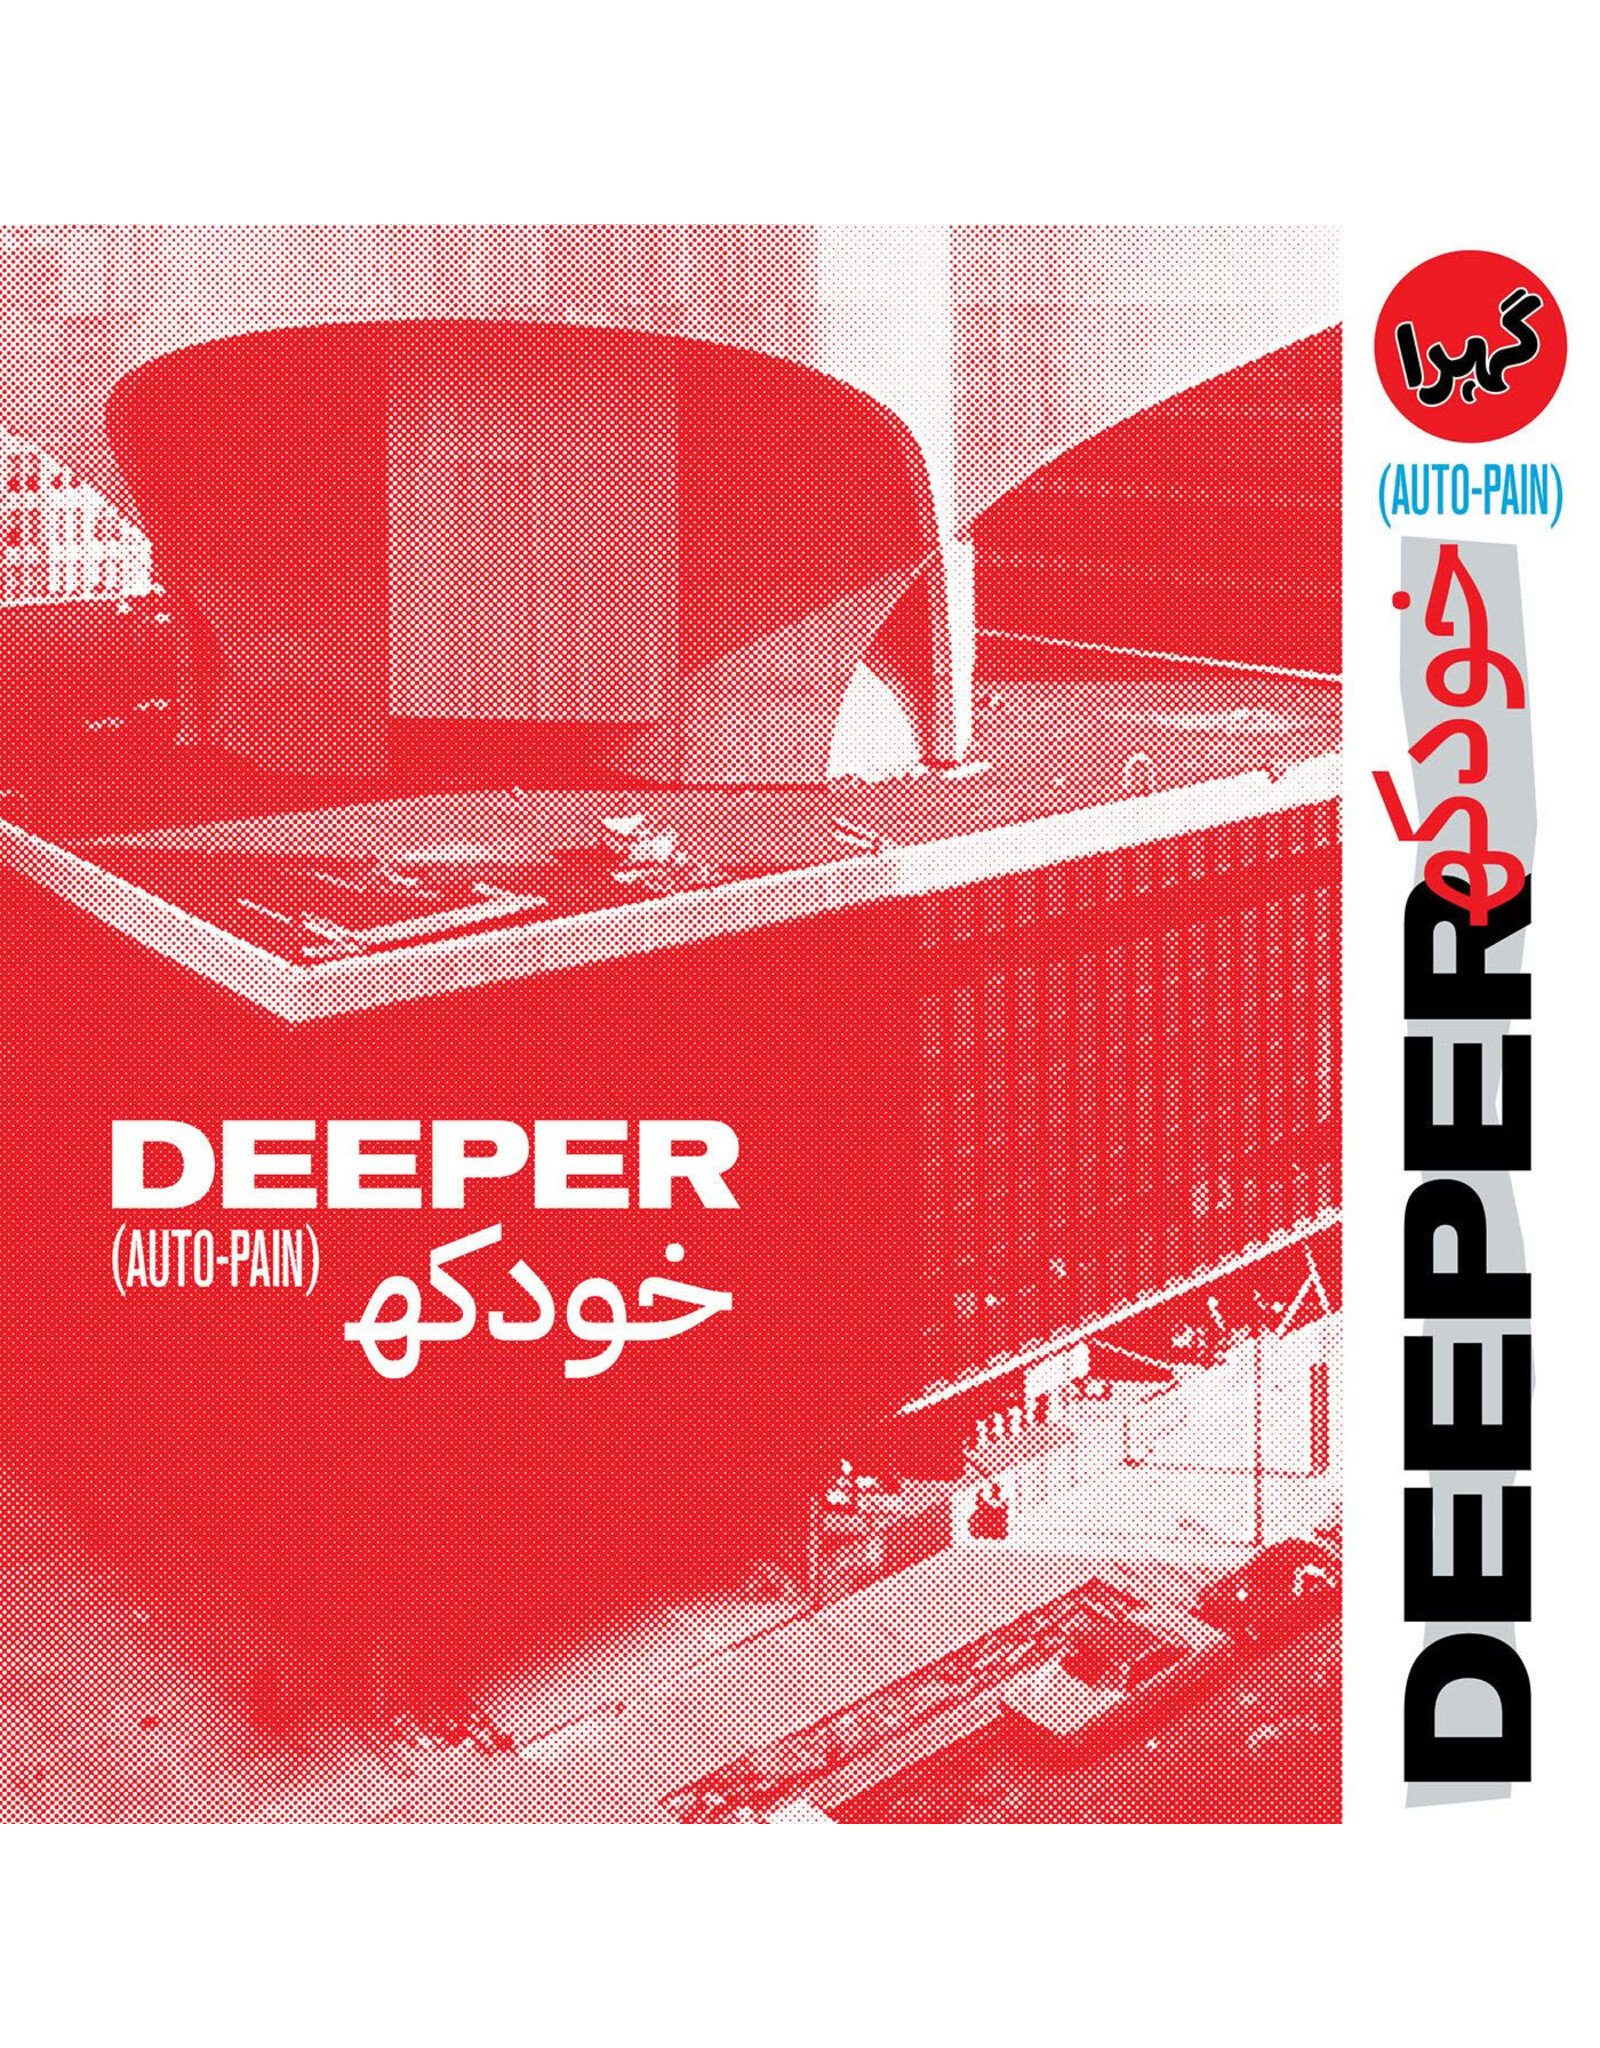 Fire Talk Deeper: Auto-Pain (Deluxe) (RED & BLACK GALAXY SWIRL) LP